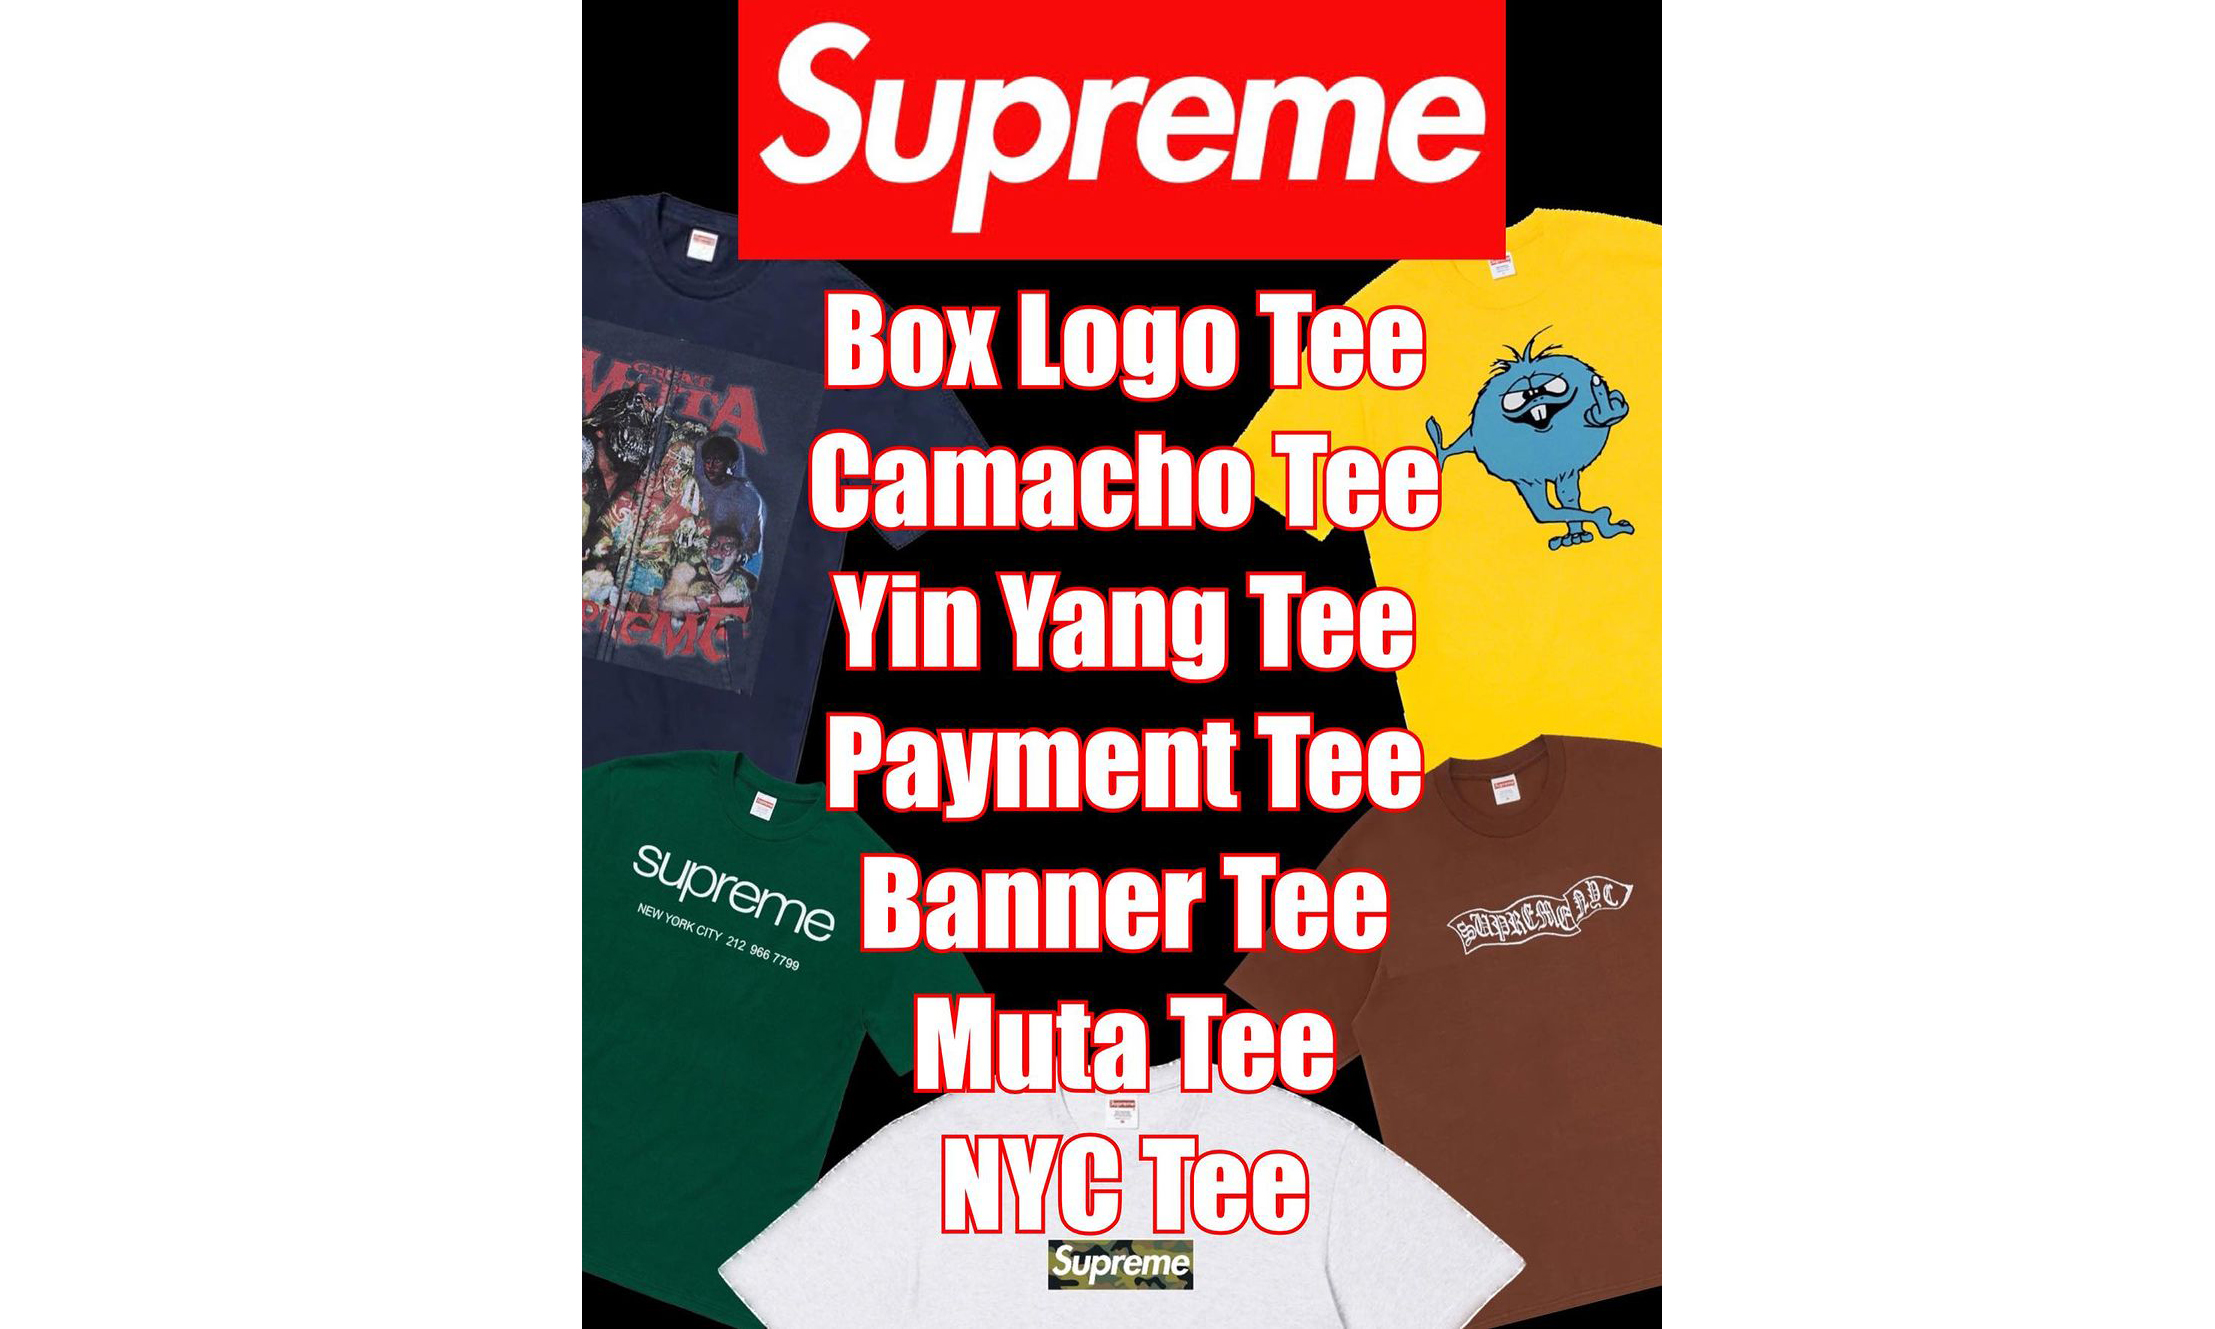 Supreme Box Logo Tee 将于本周发售